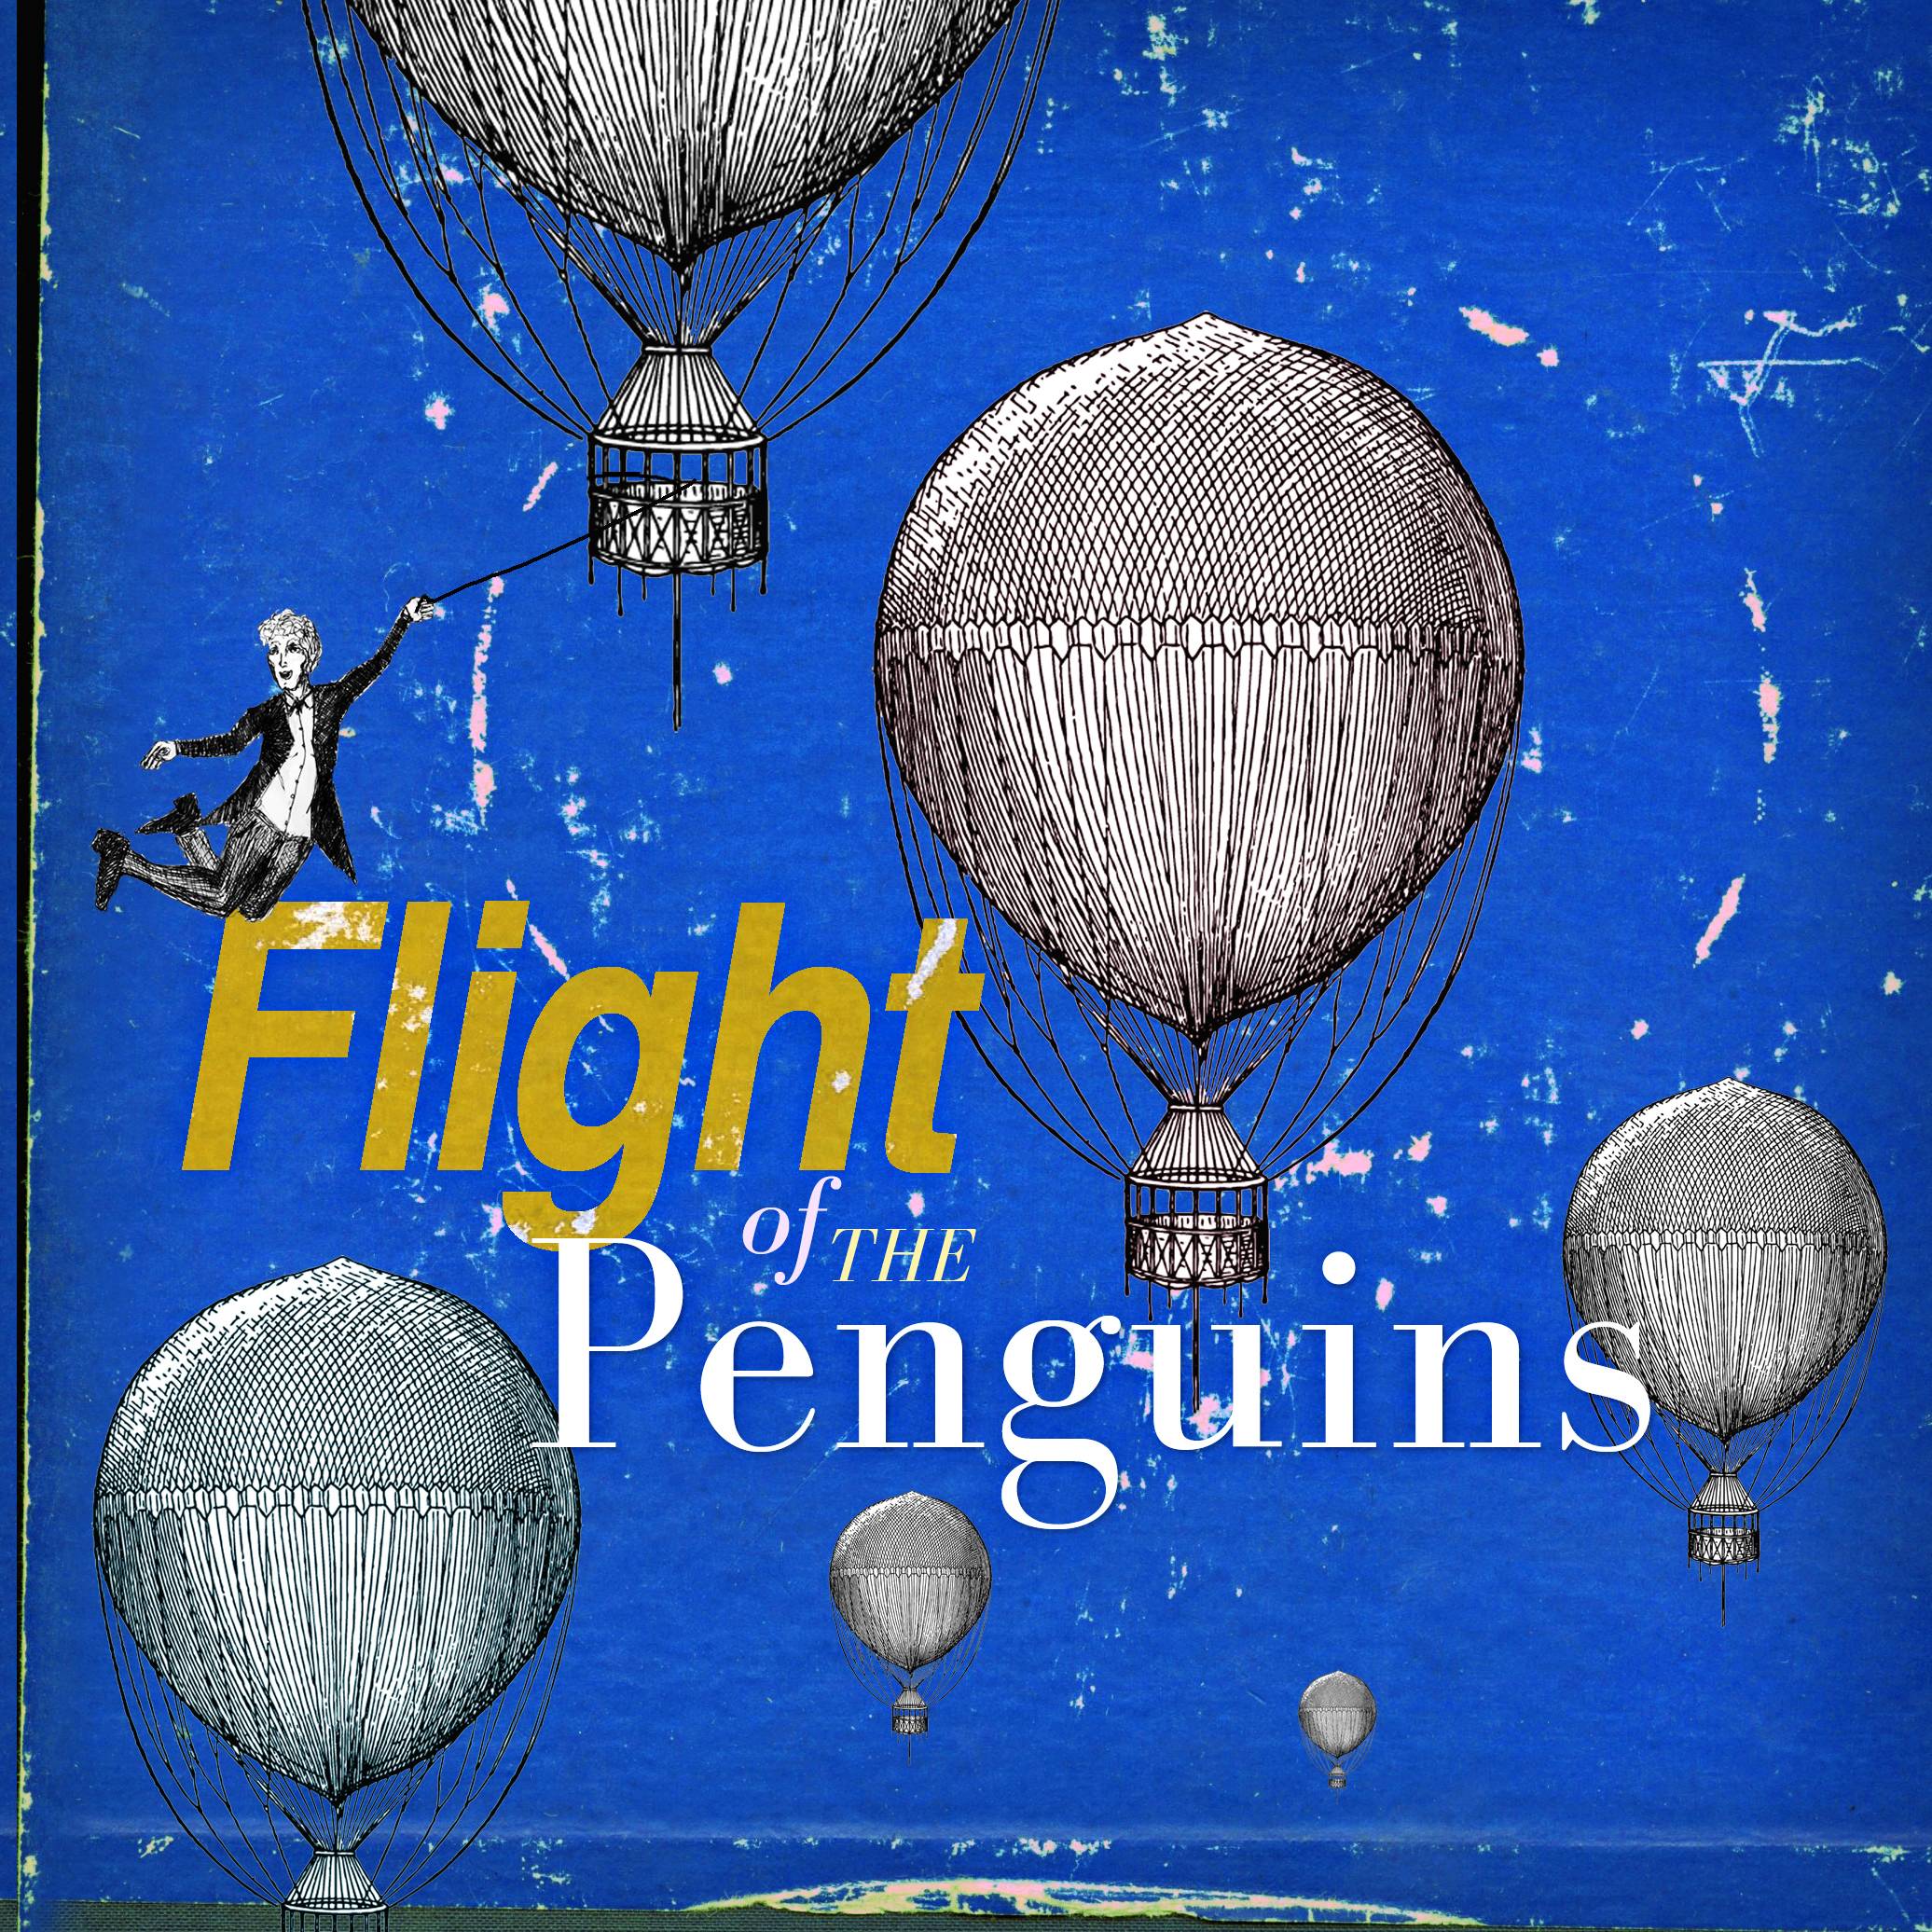 Flight of the Penguins, 2013